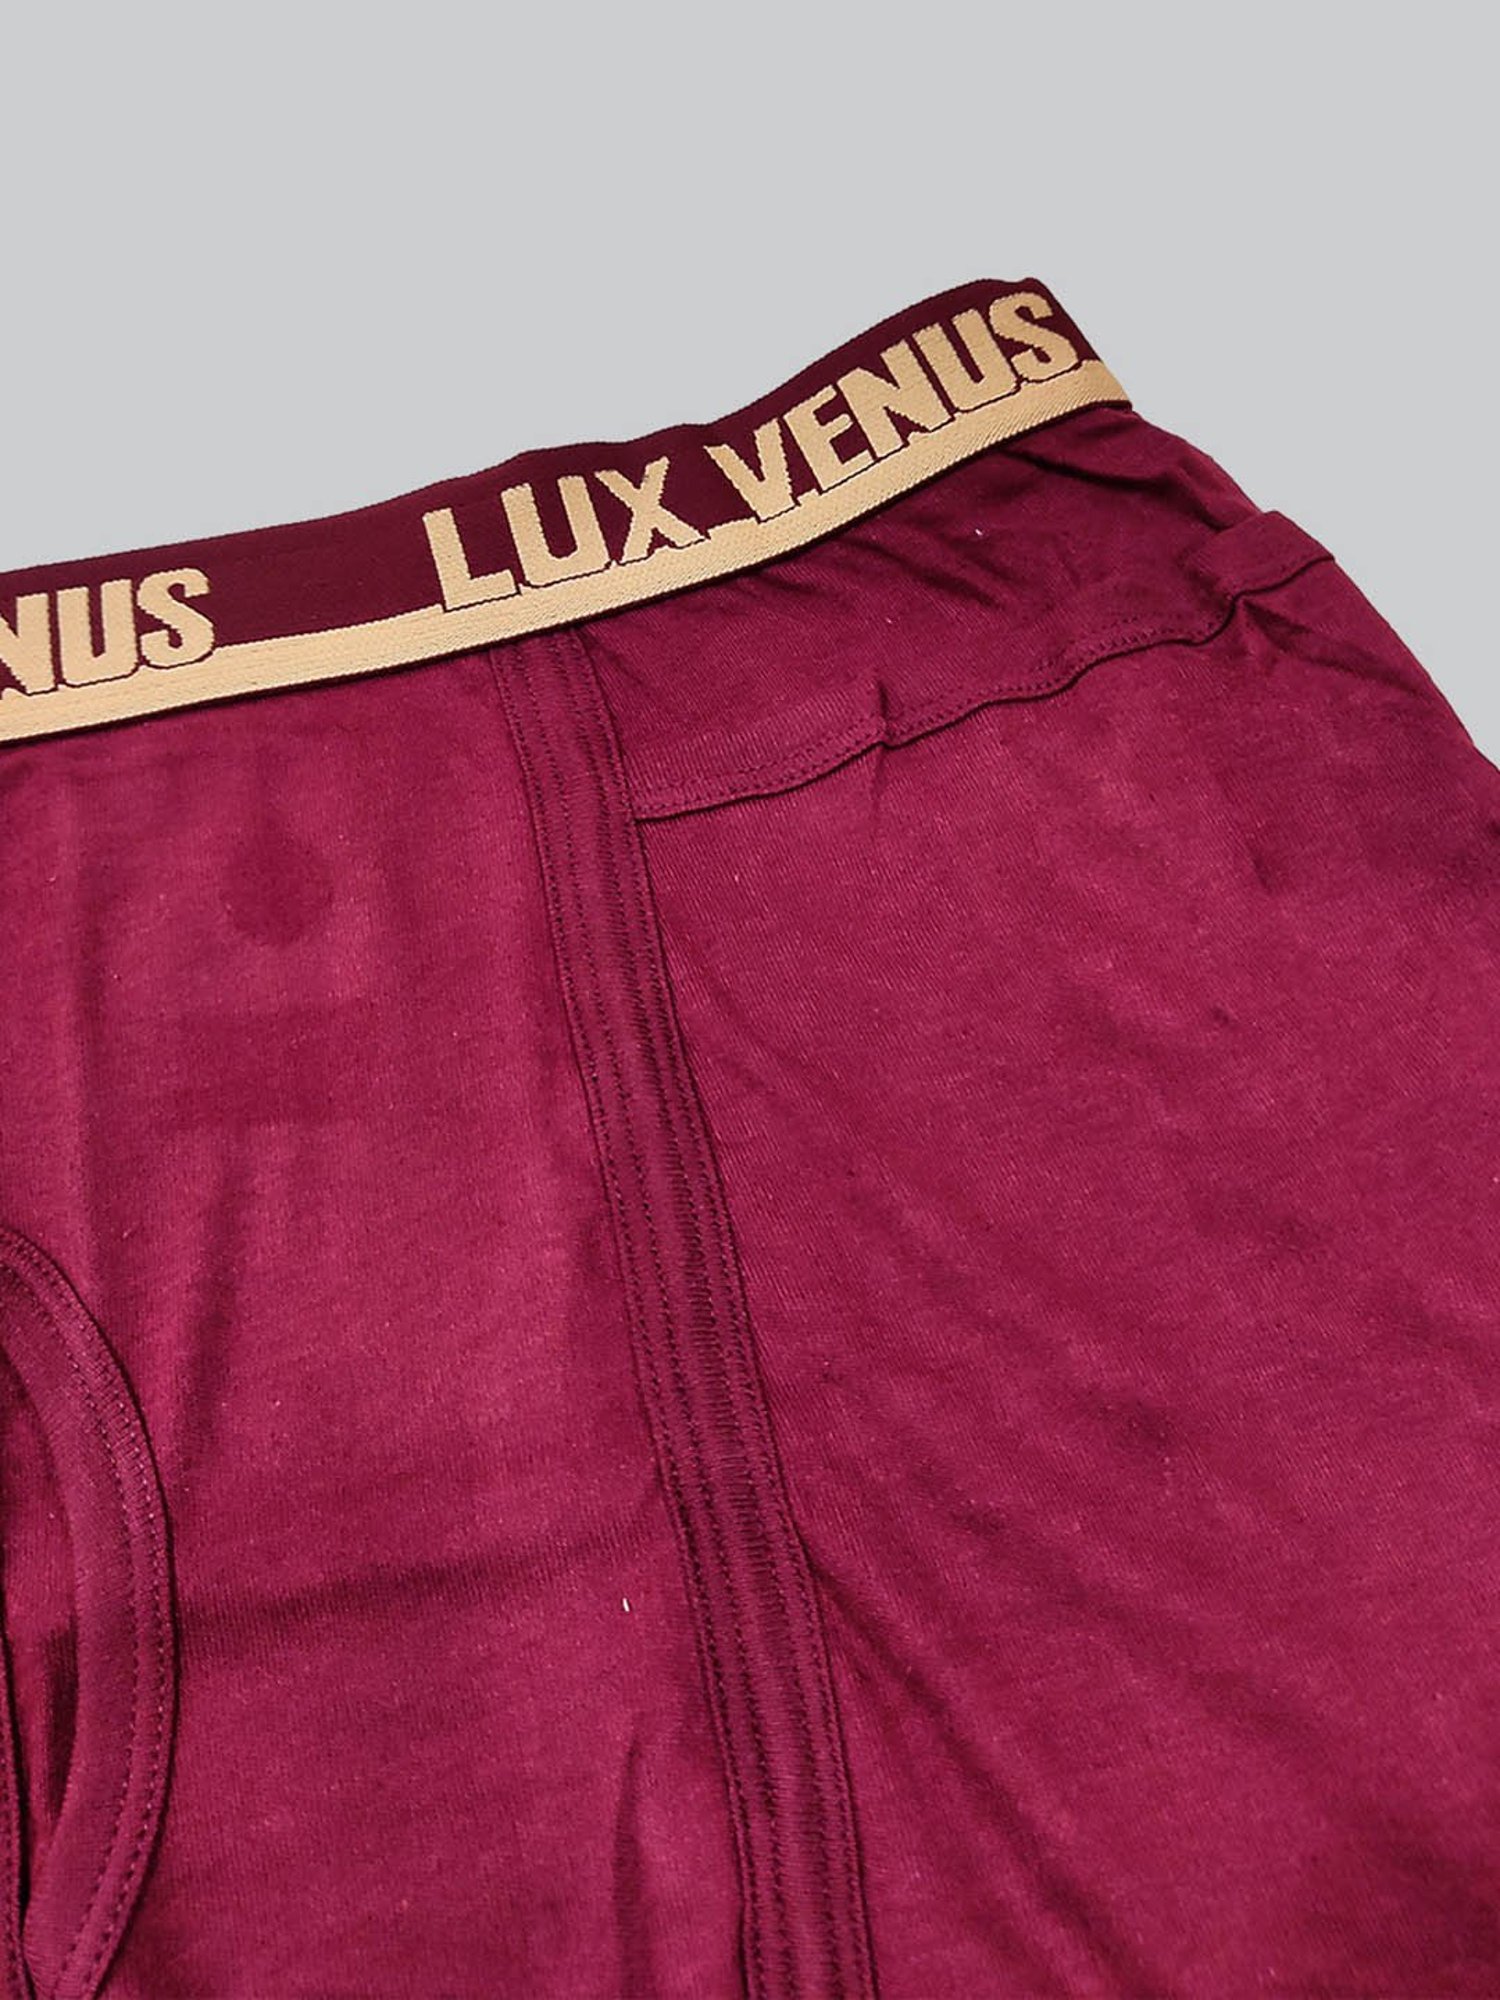 Buy LUX VENUS Men Pack Of 4 Trunks VENUS_POCKET_DRW_AST - Trunk for Men  2114778